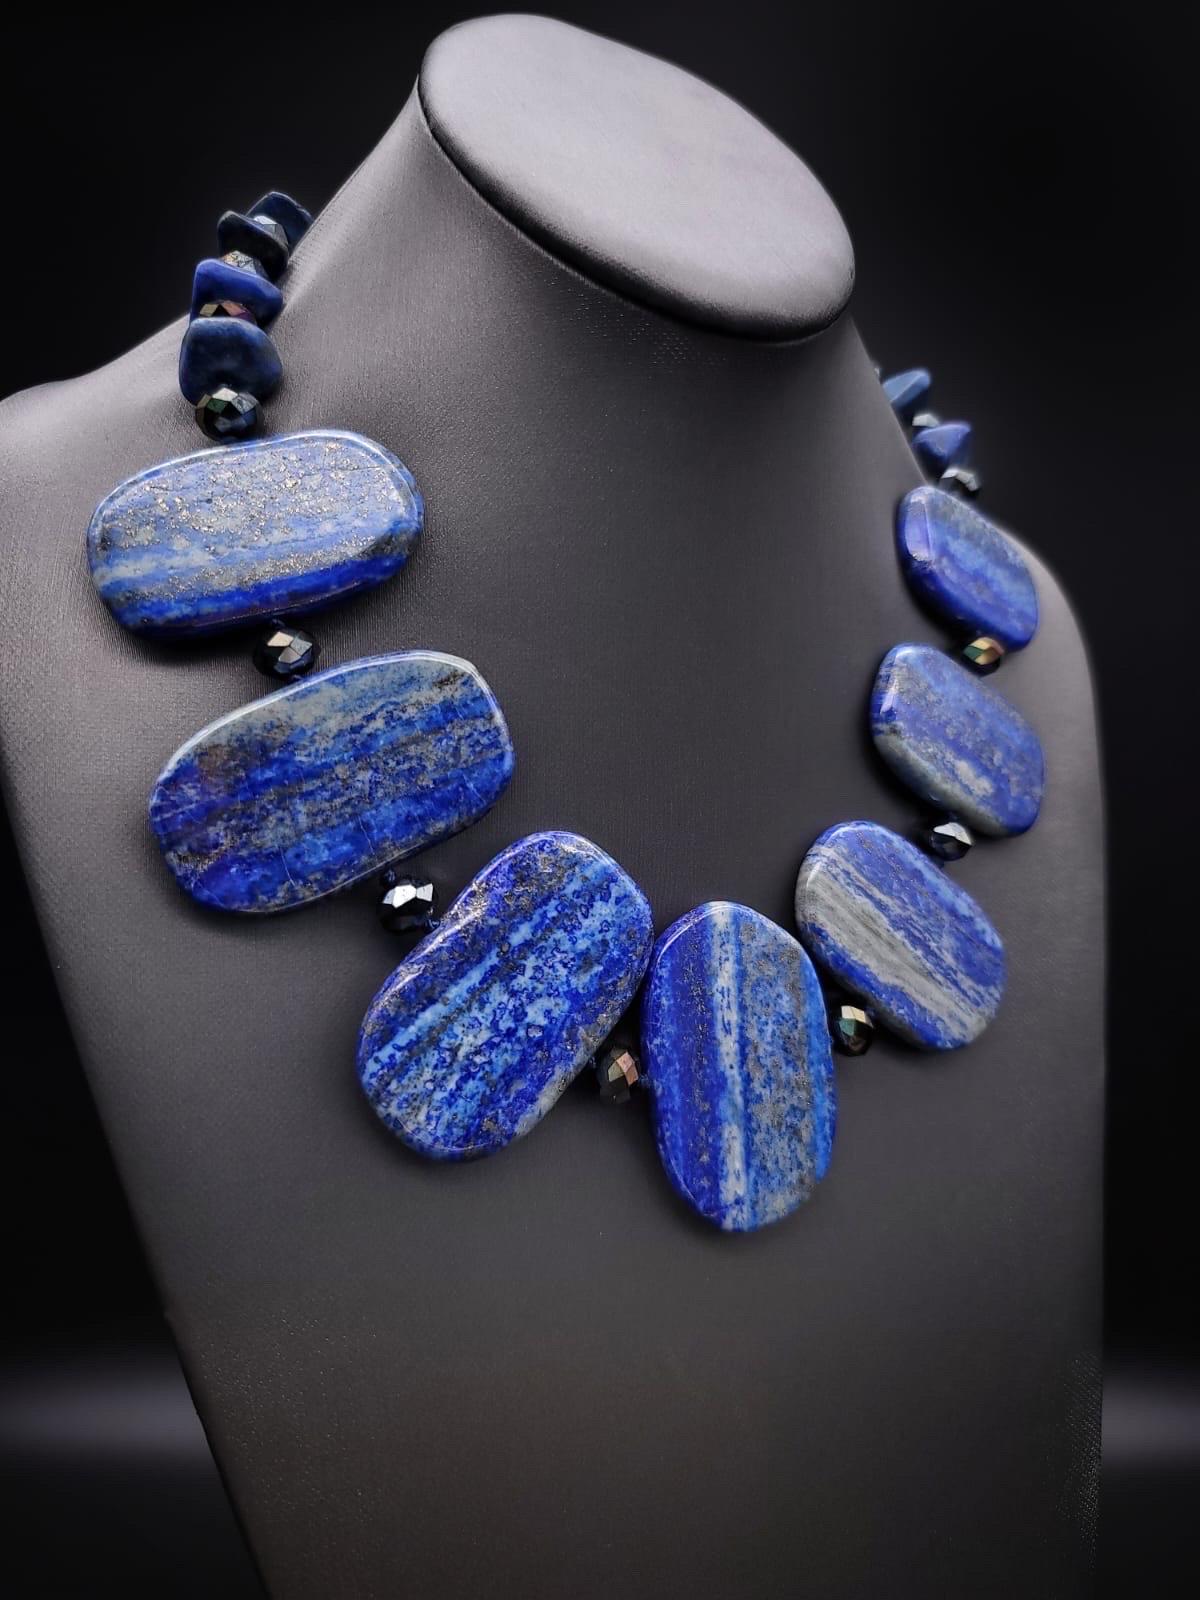 Mixed Cut A.Jeschel Spectacular Lapis Lazuli plates necklace. For Sale